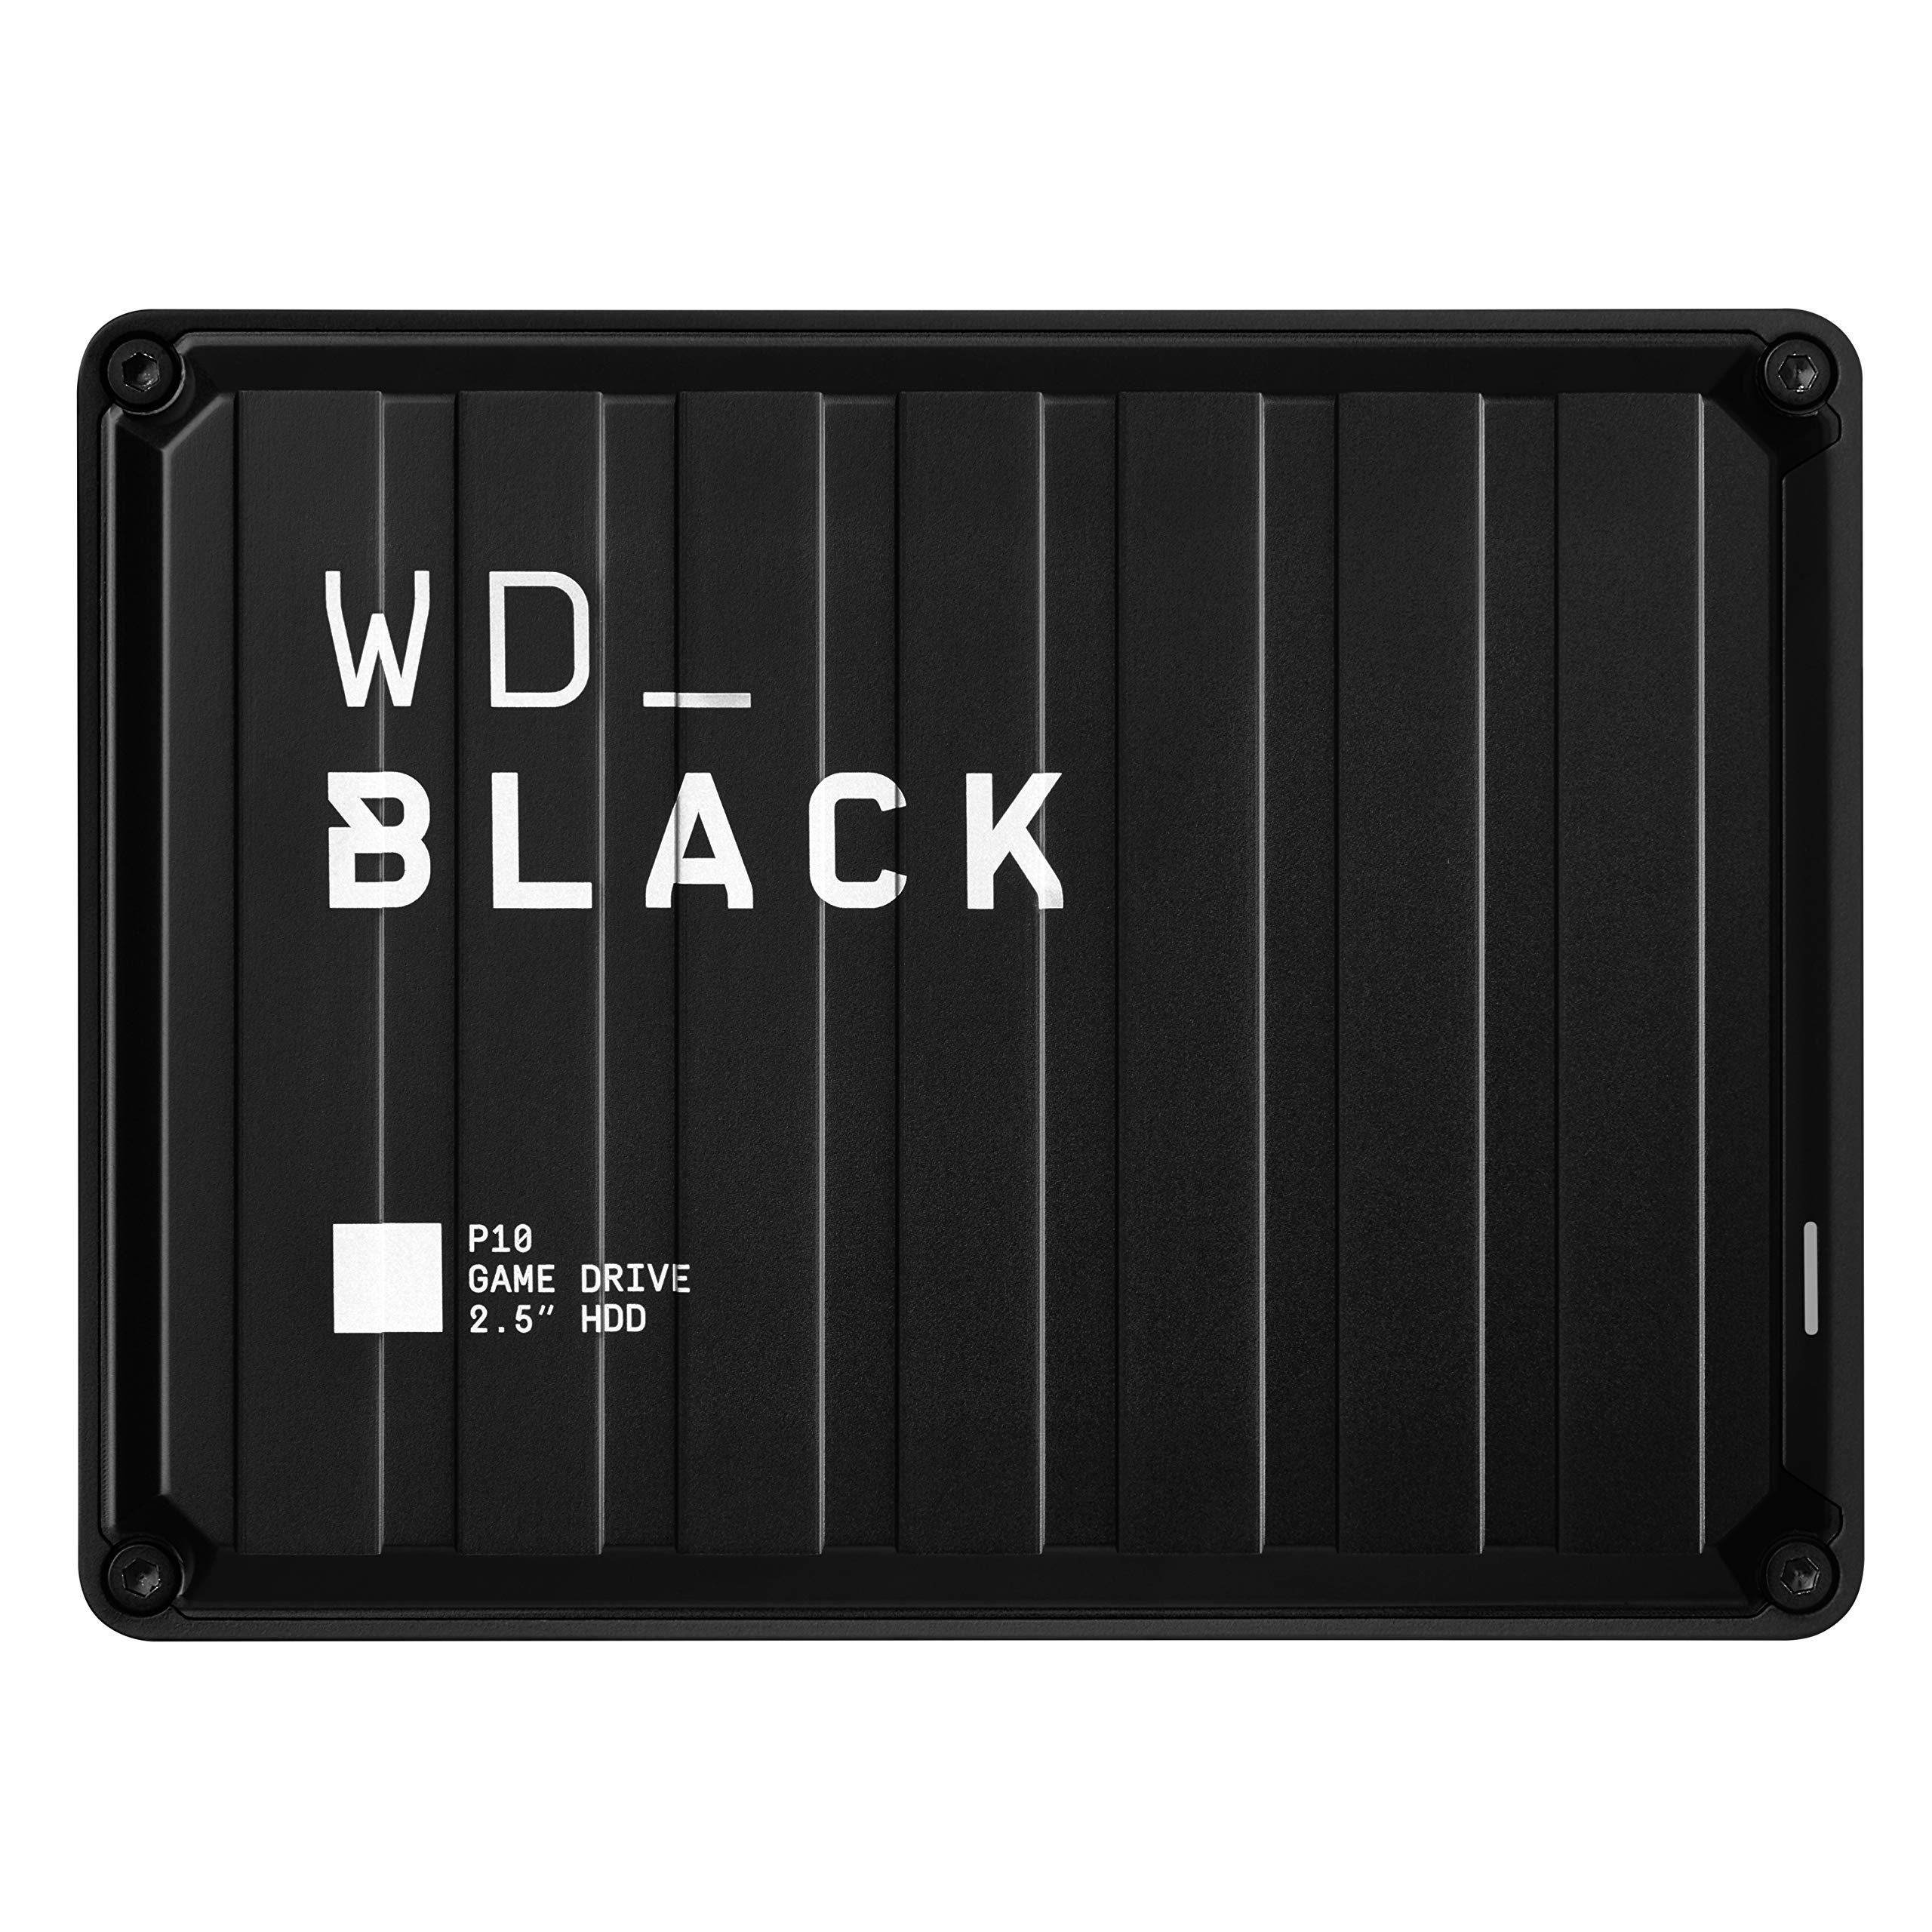 WD_BLACK 5TB P10 Game Drive - $84.99